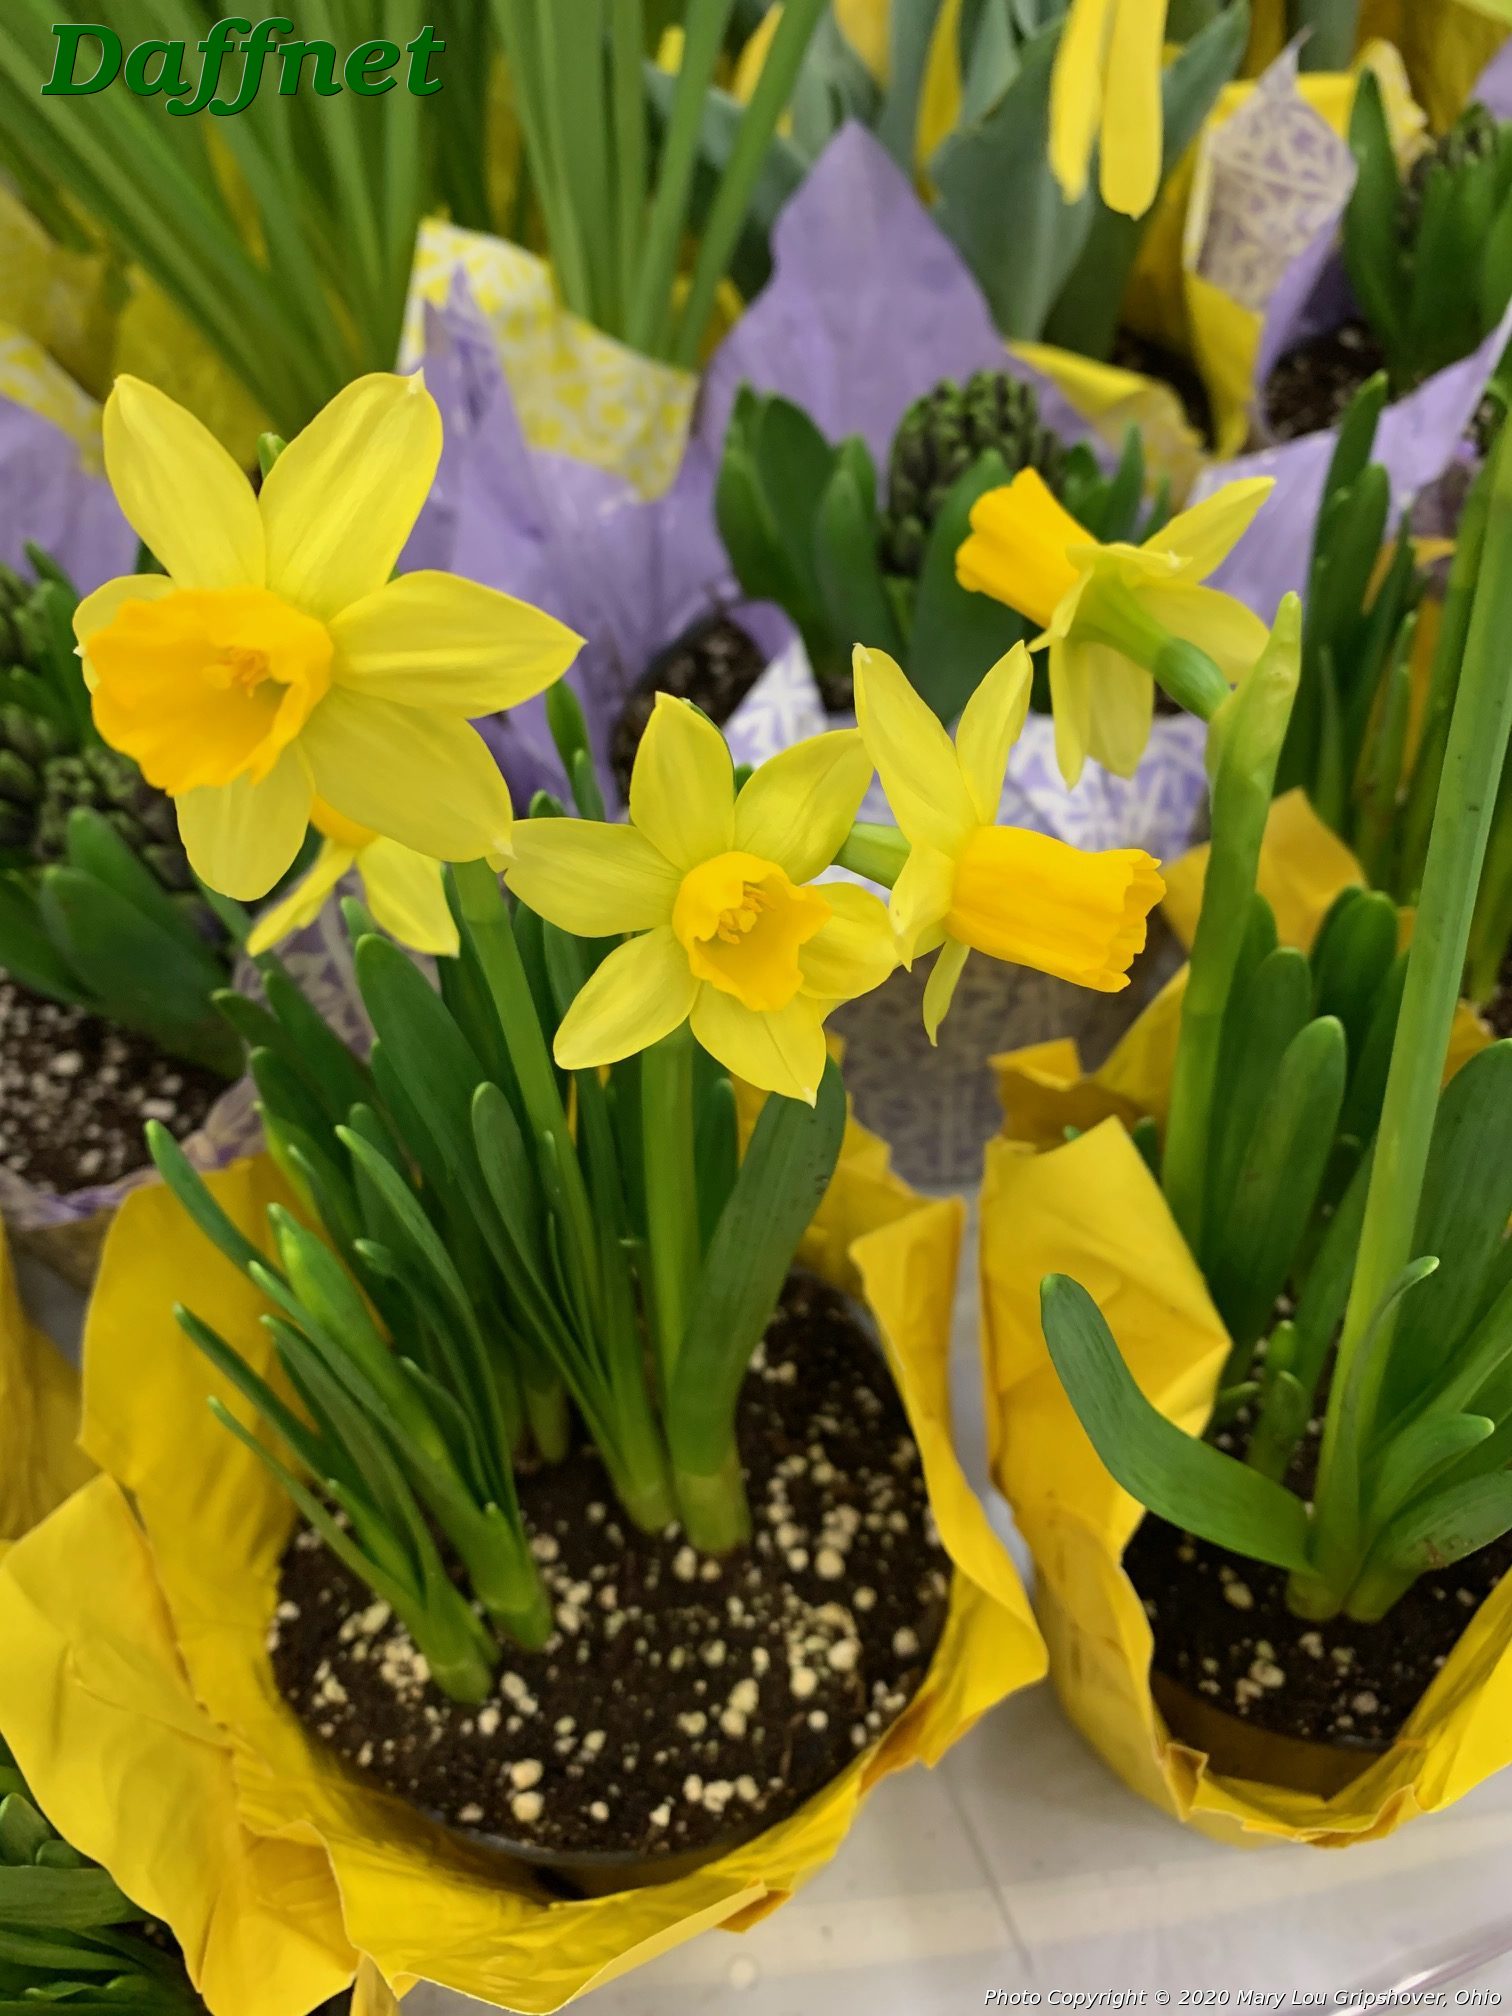 Grocer daffodil 24th Annual